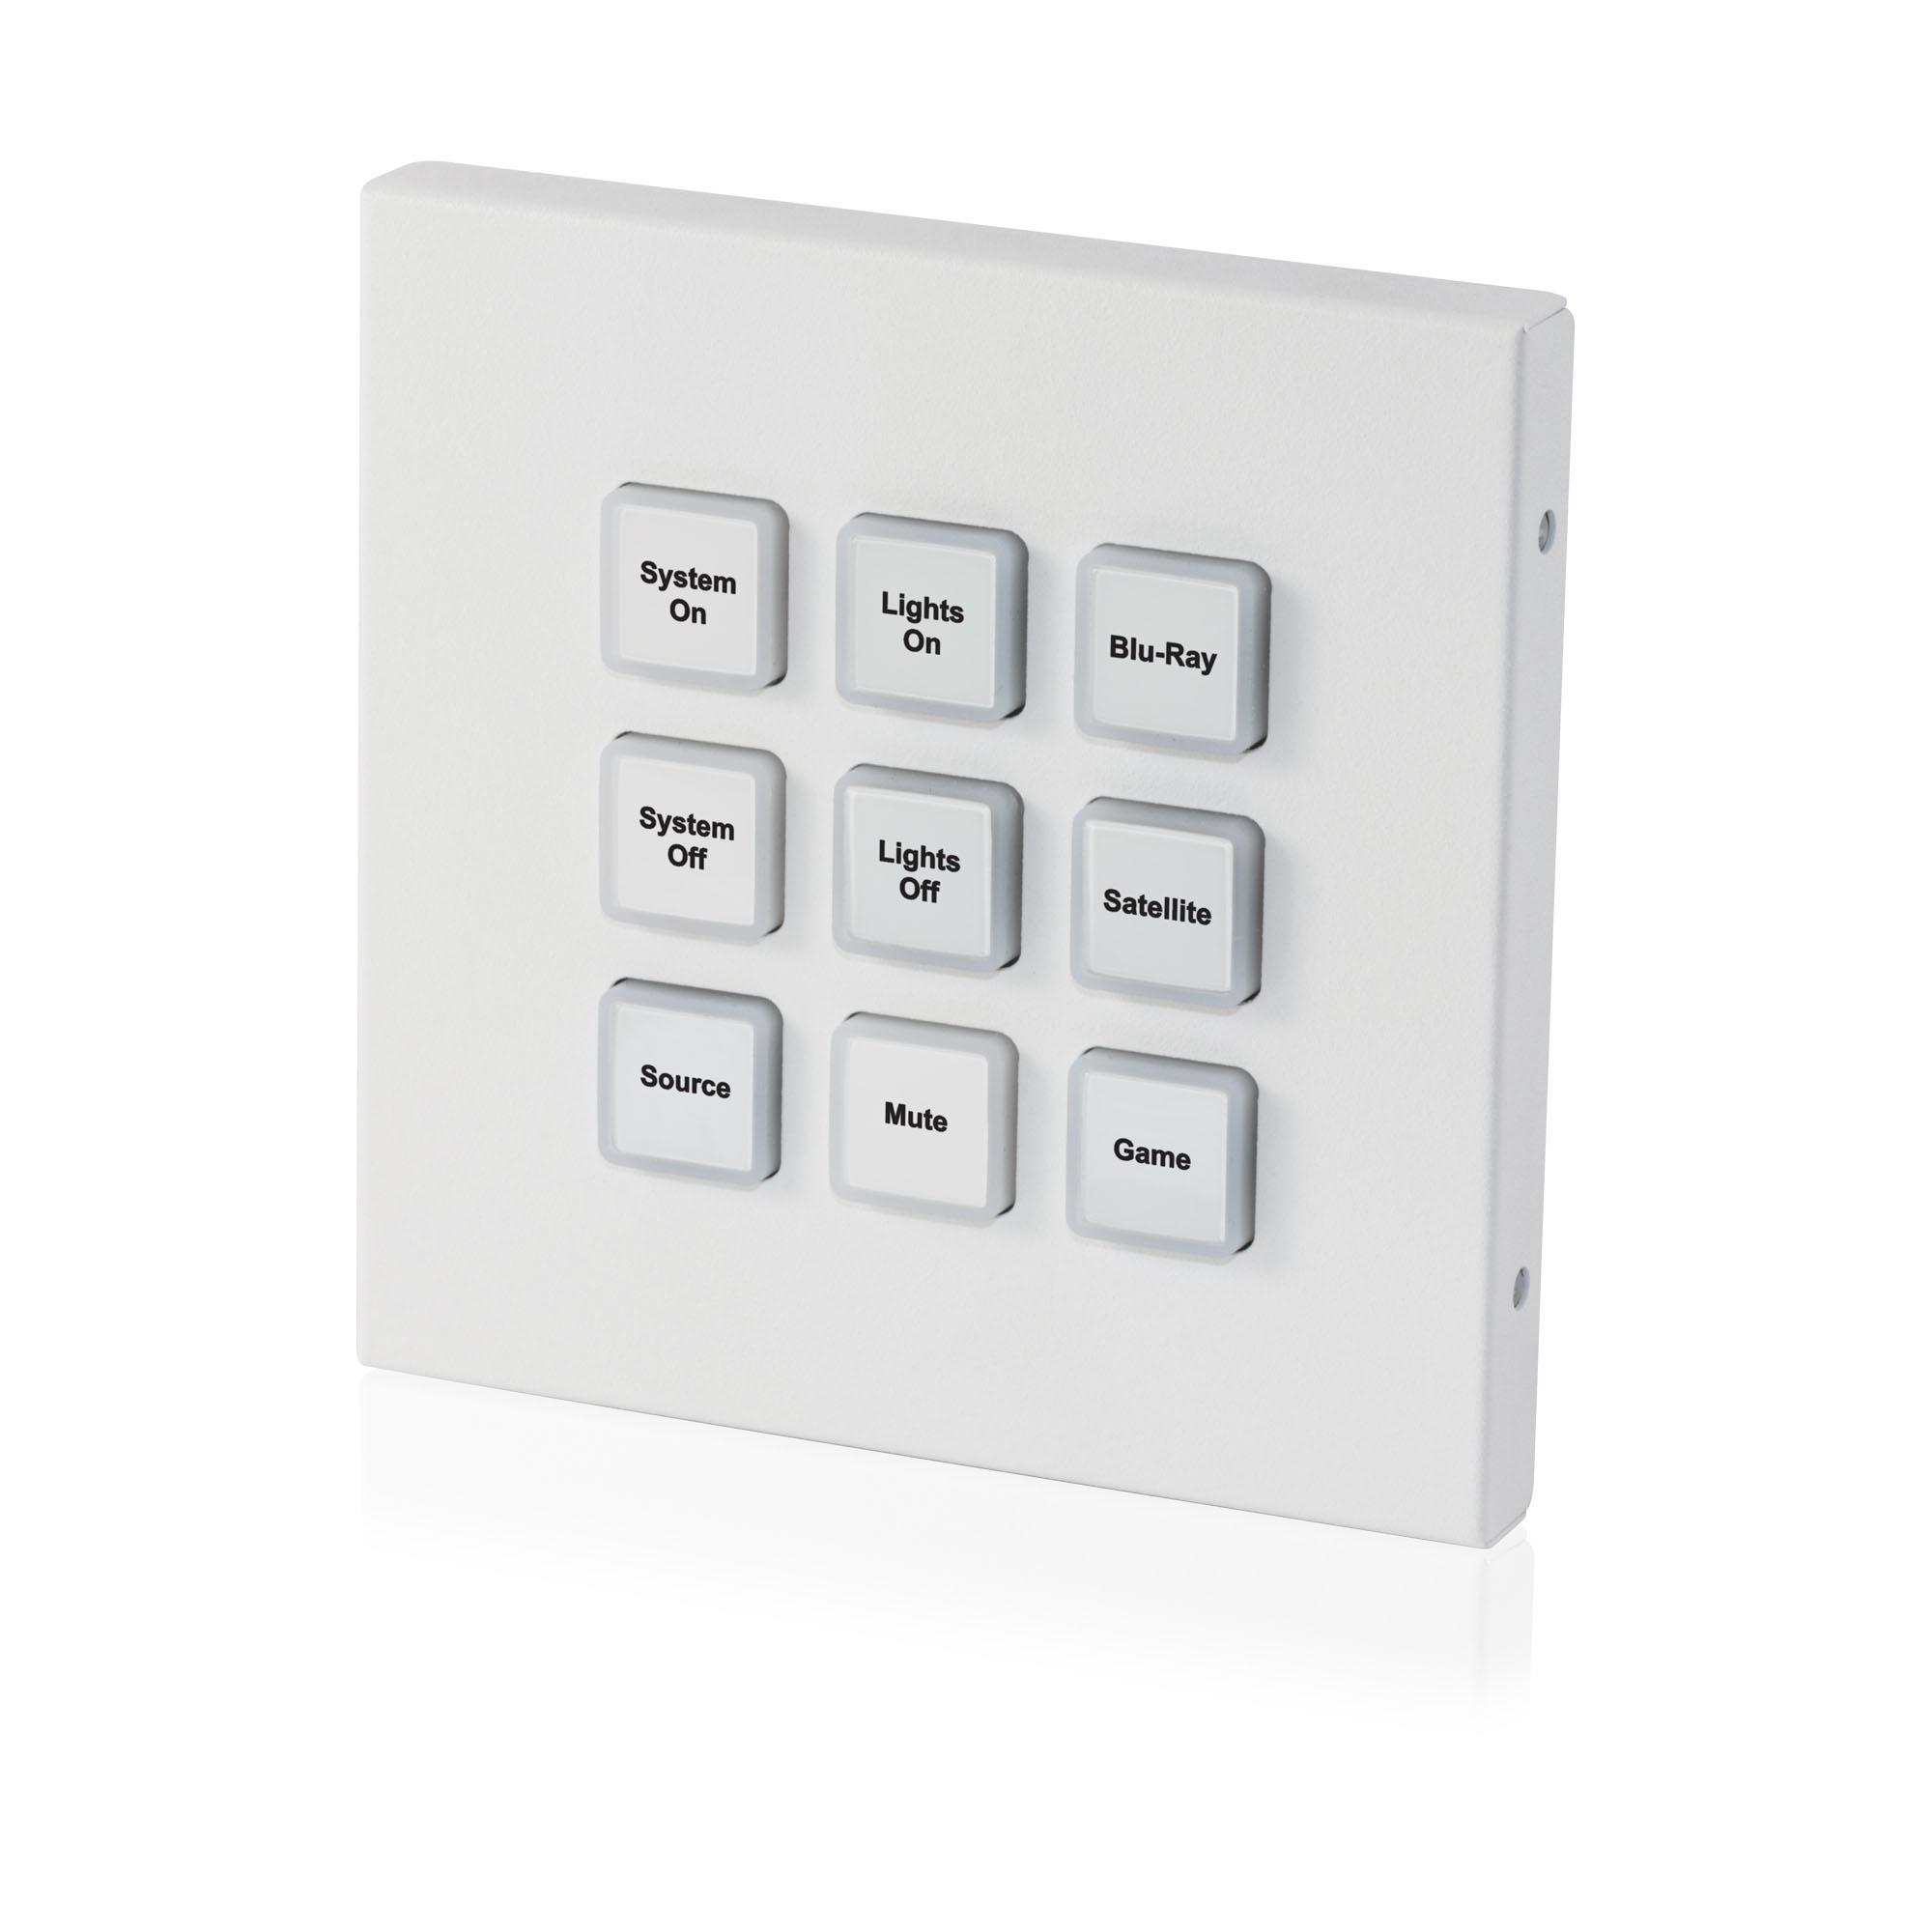 CR-KP2 9 Button Wall-mount Keypad Control System (UK Single Gang)